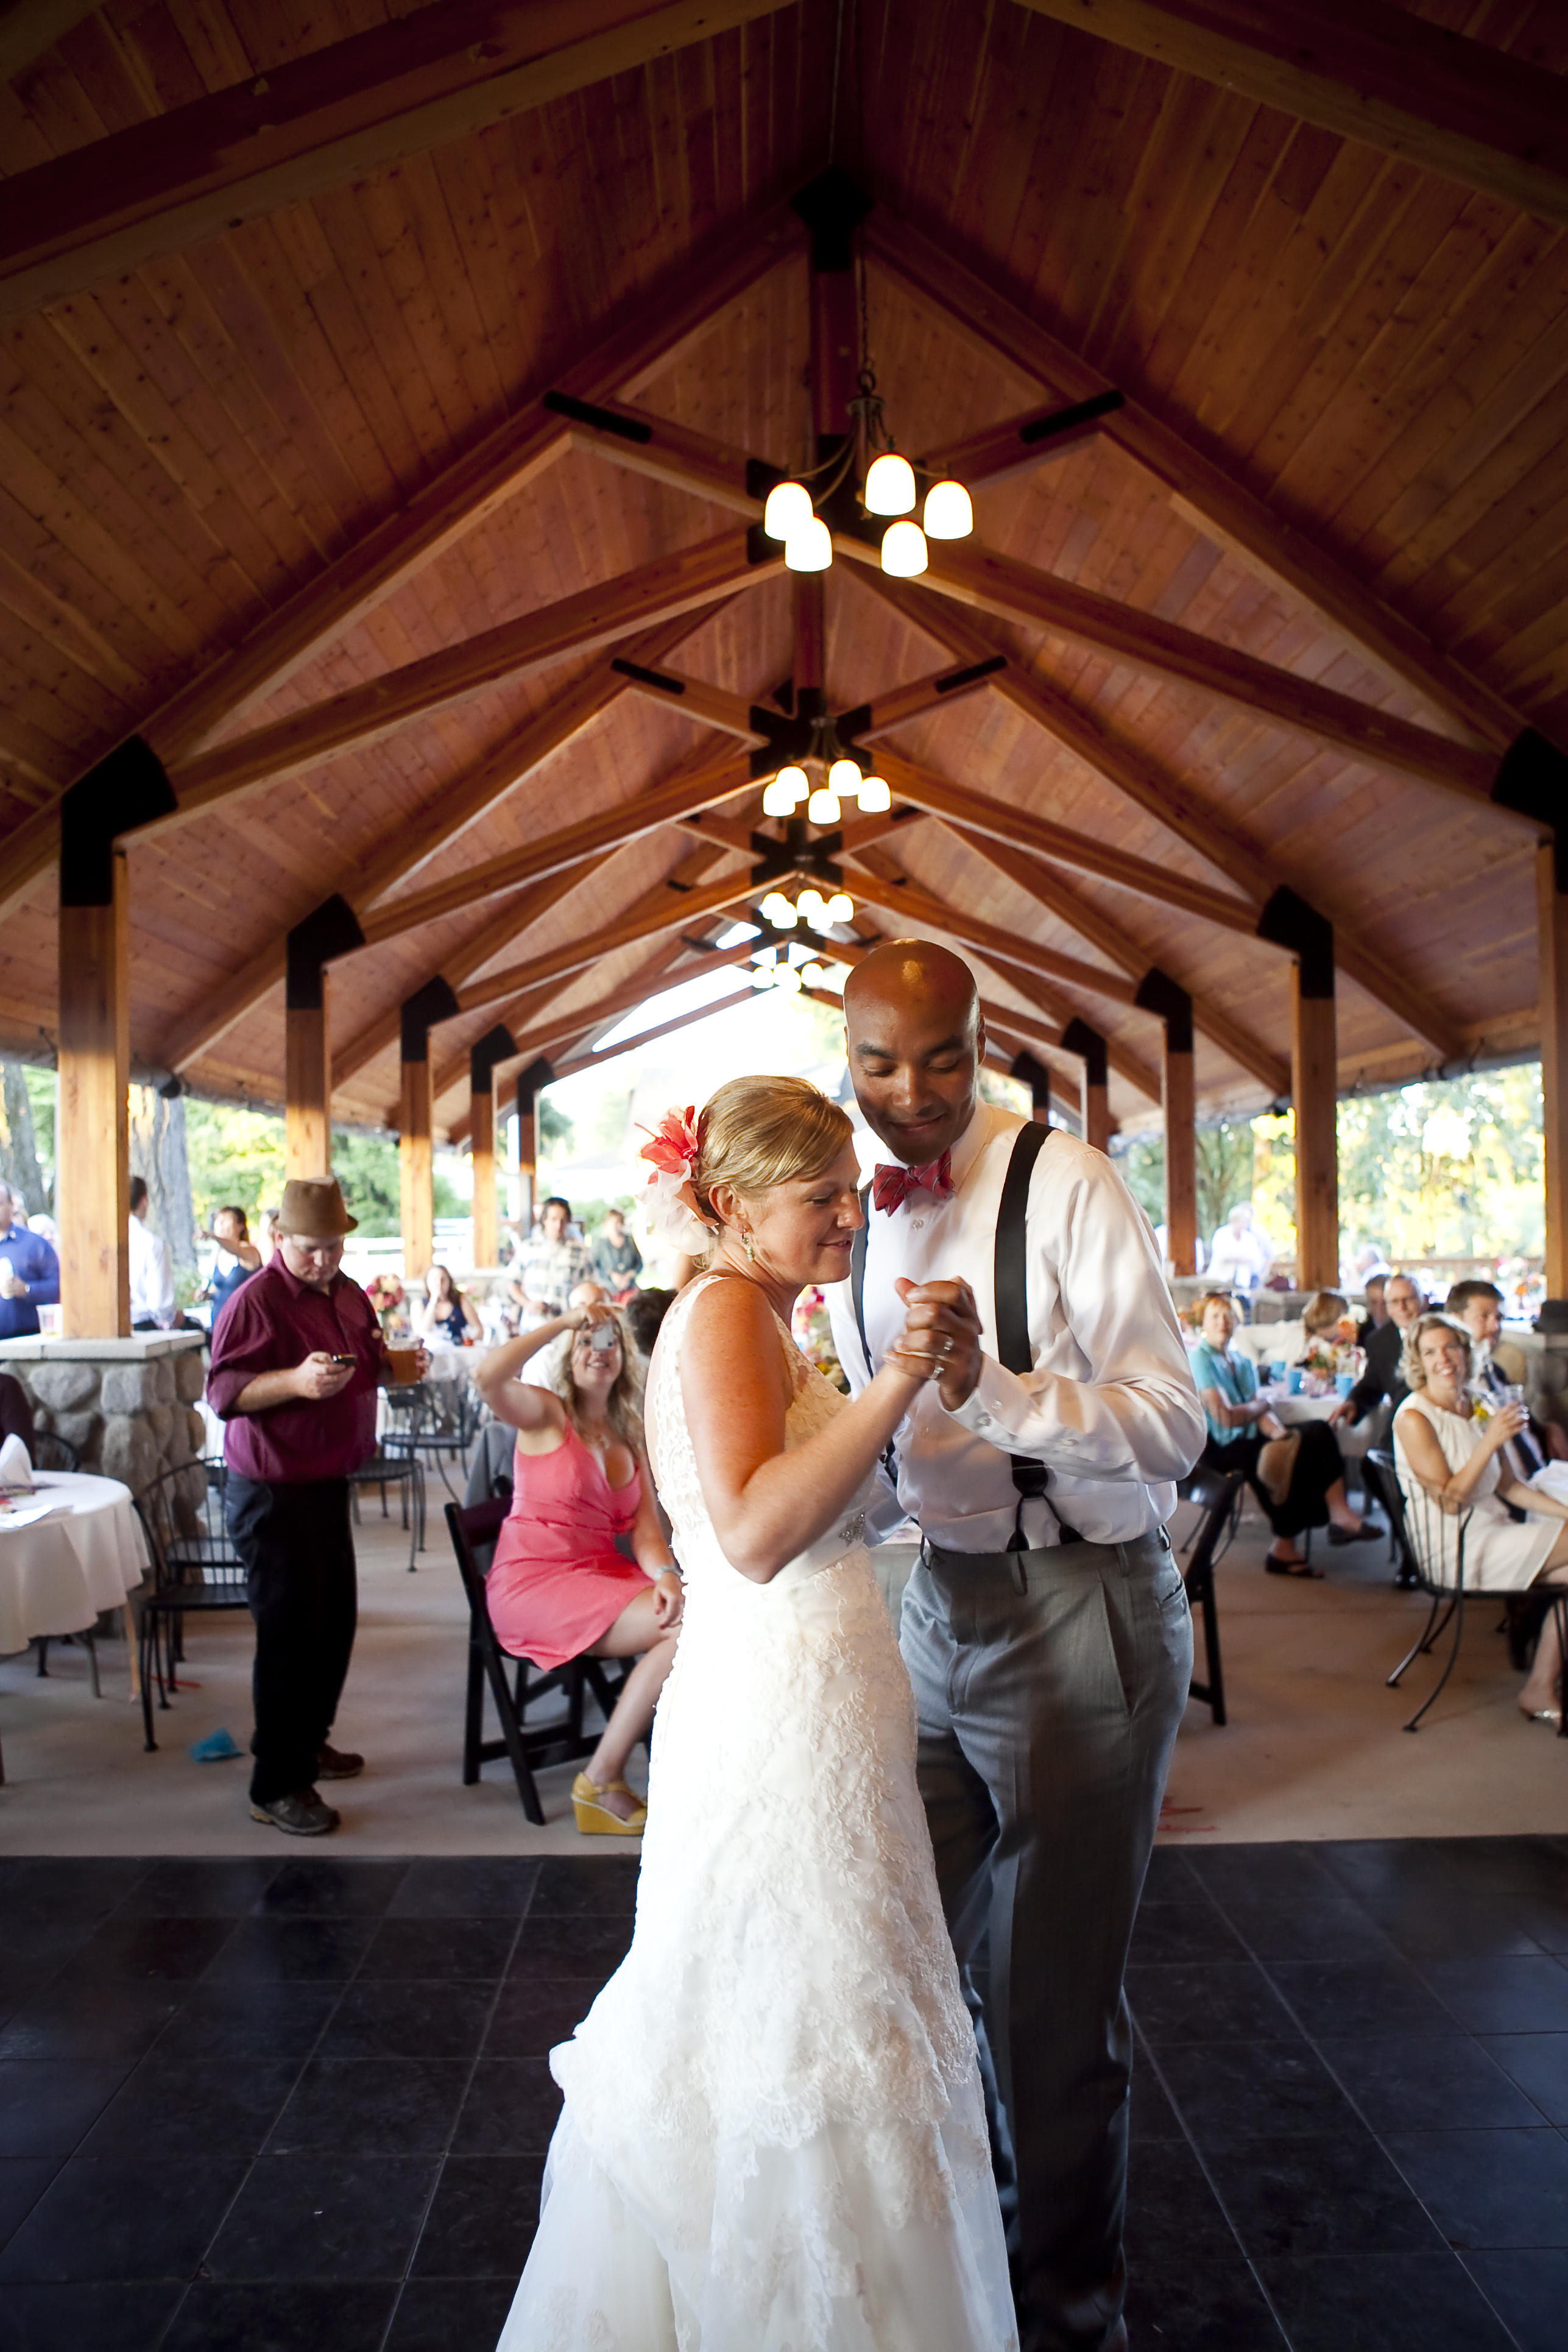 Sah-Hah-Lee Golf Course Pavilion - Clackamas OR - Rustic Wedding Guide